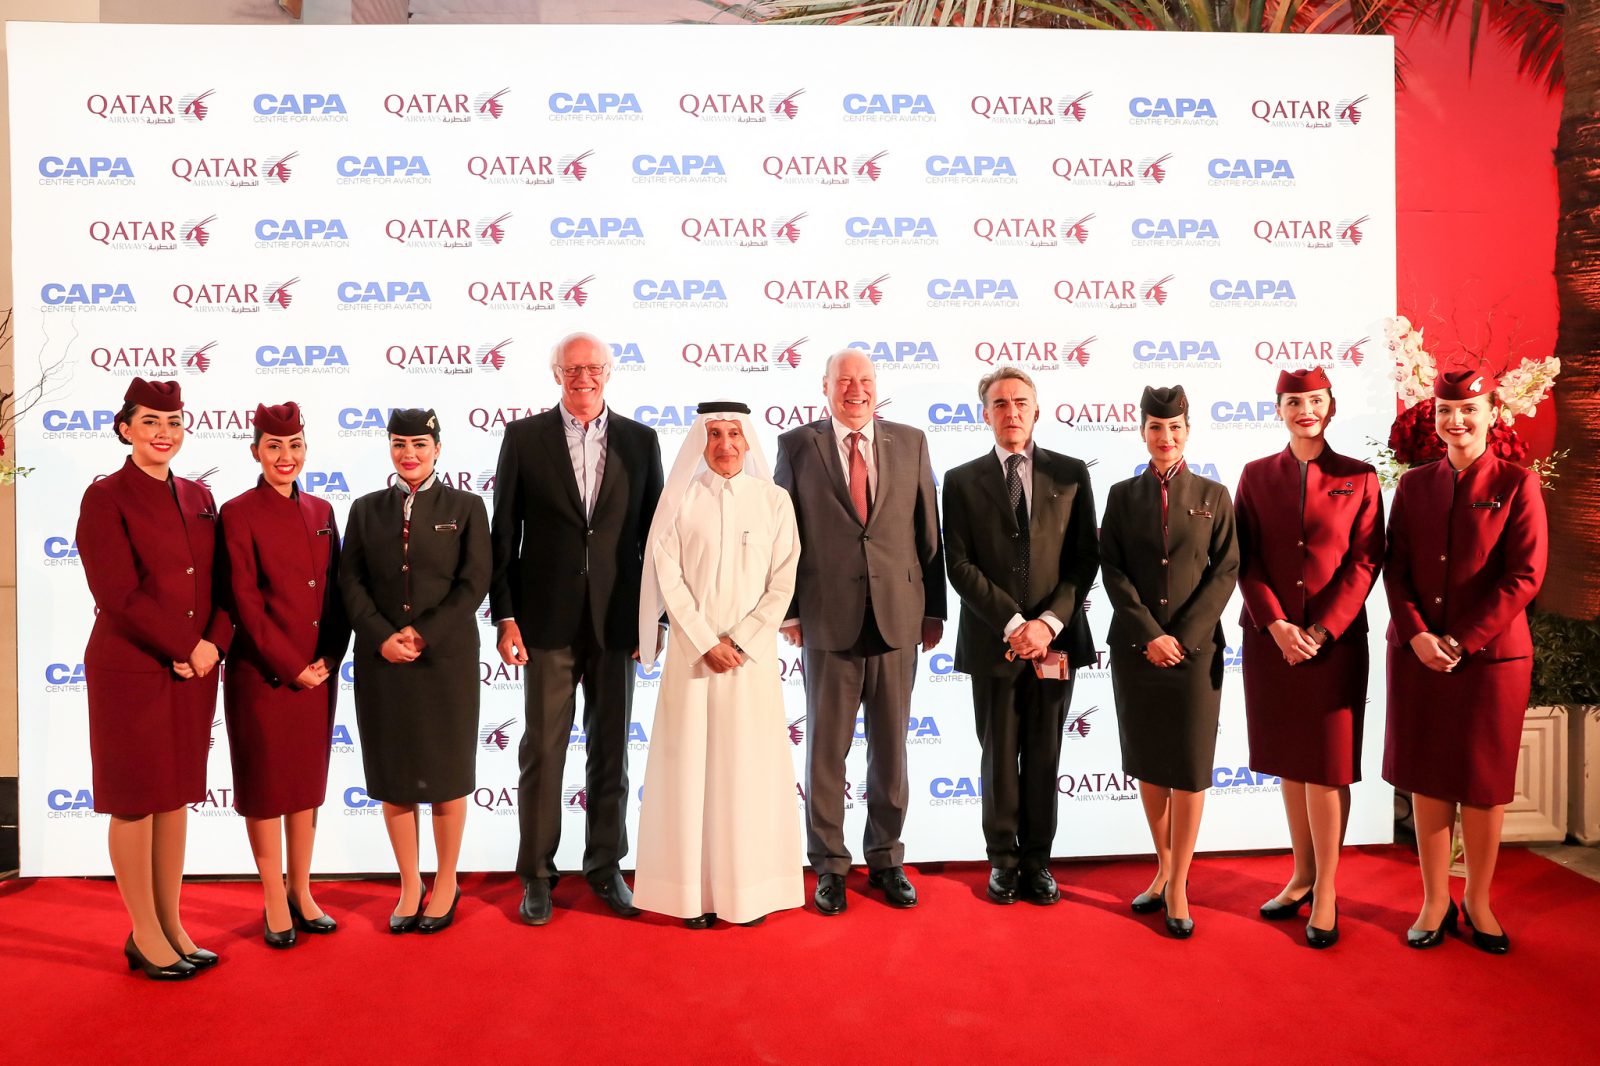 EU and Qatar Reach Deal On Comprehensive Air Transport Agreement